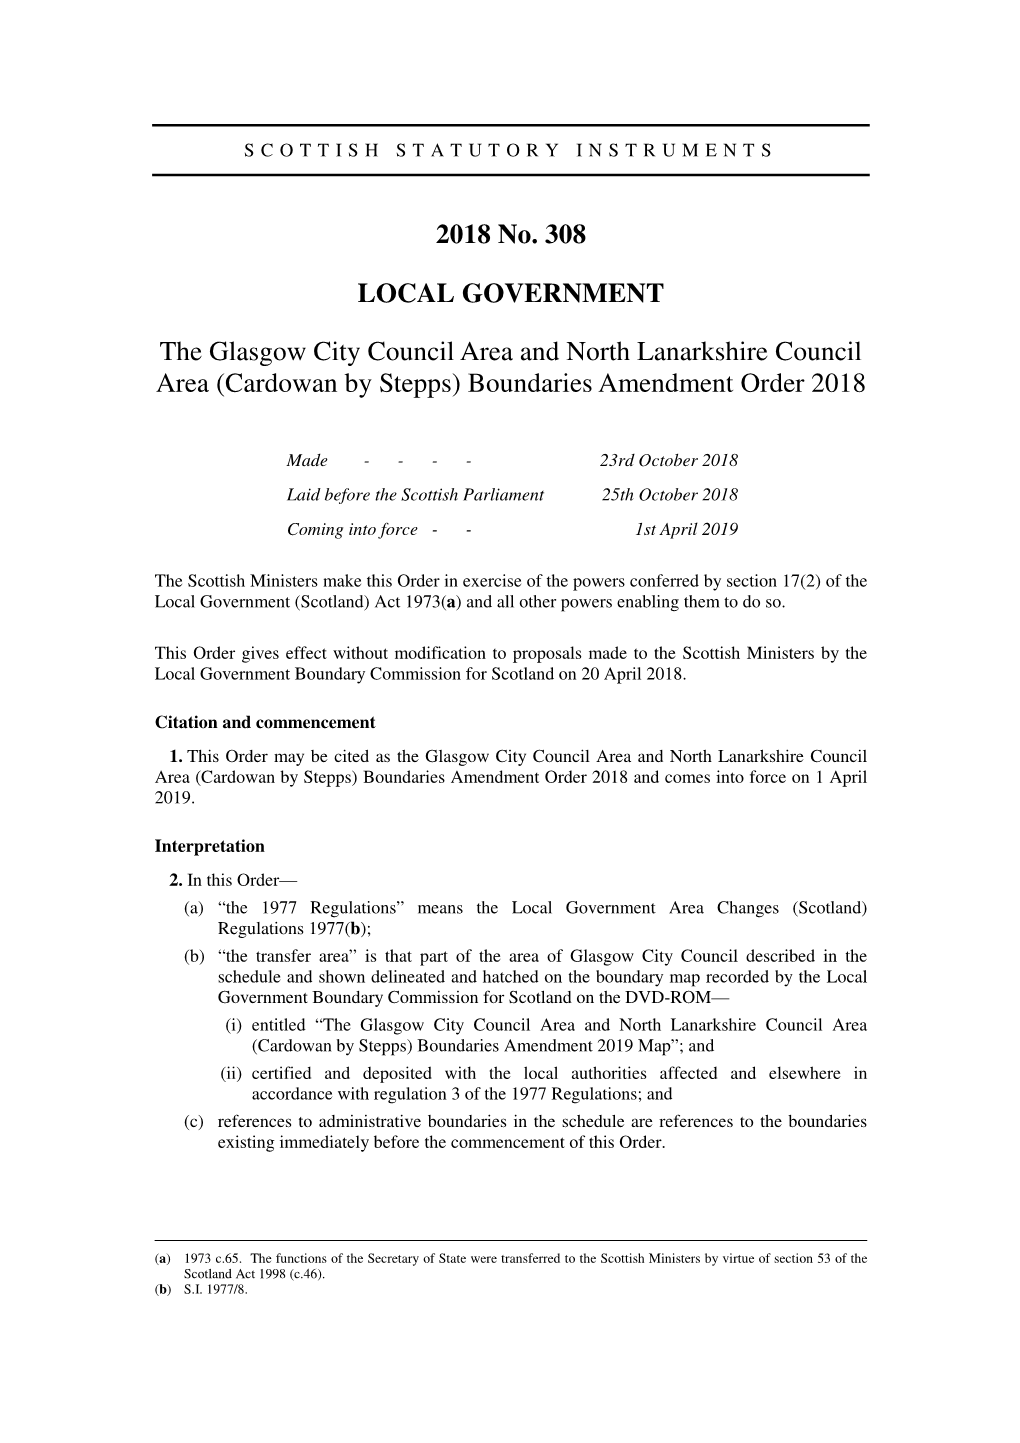 The Glasgow City Council Area and North Lanarkshire Council Area (Cardowan by Stepps) Boundaries Amendment Order 2018